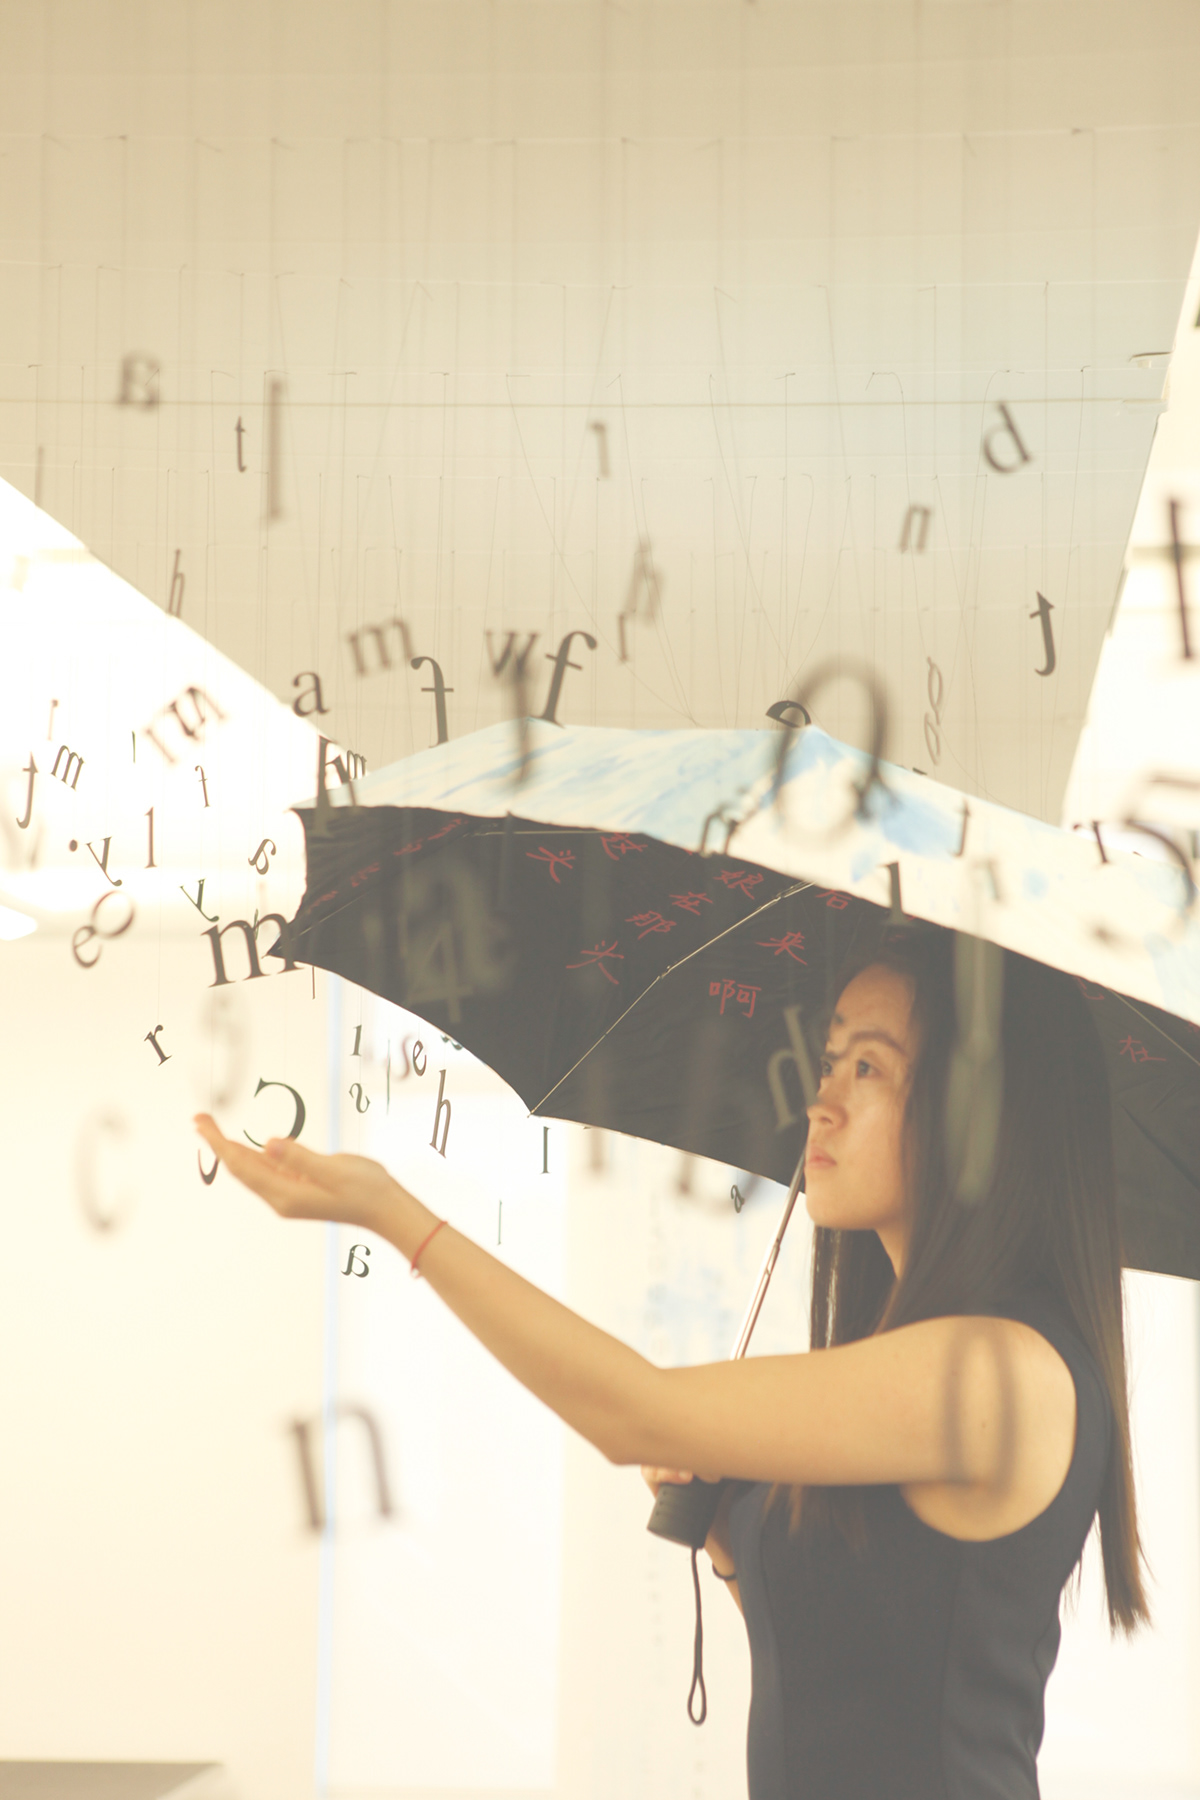 rain Umbrella homesickness nostalgia Chinese Character installation poster